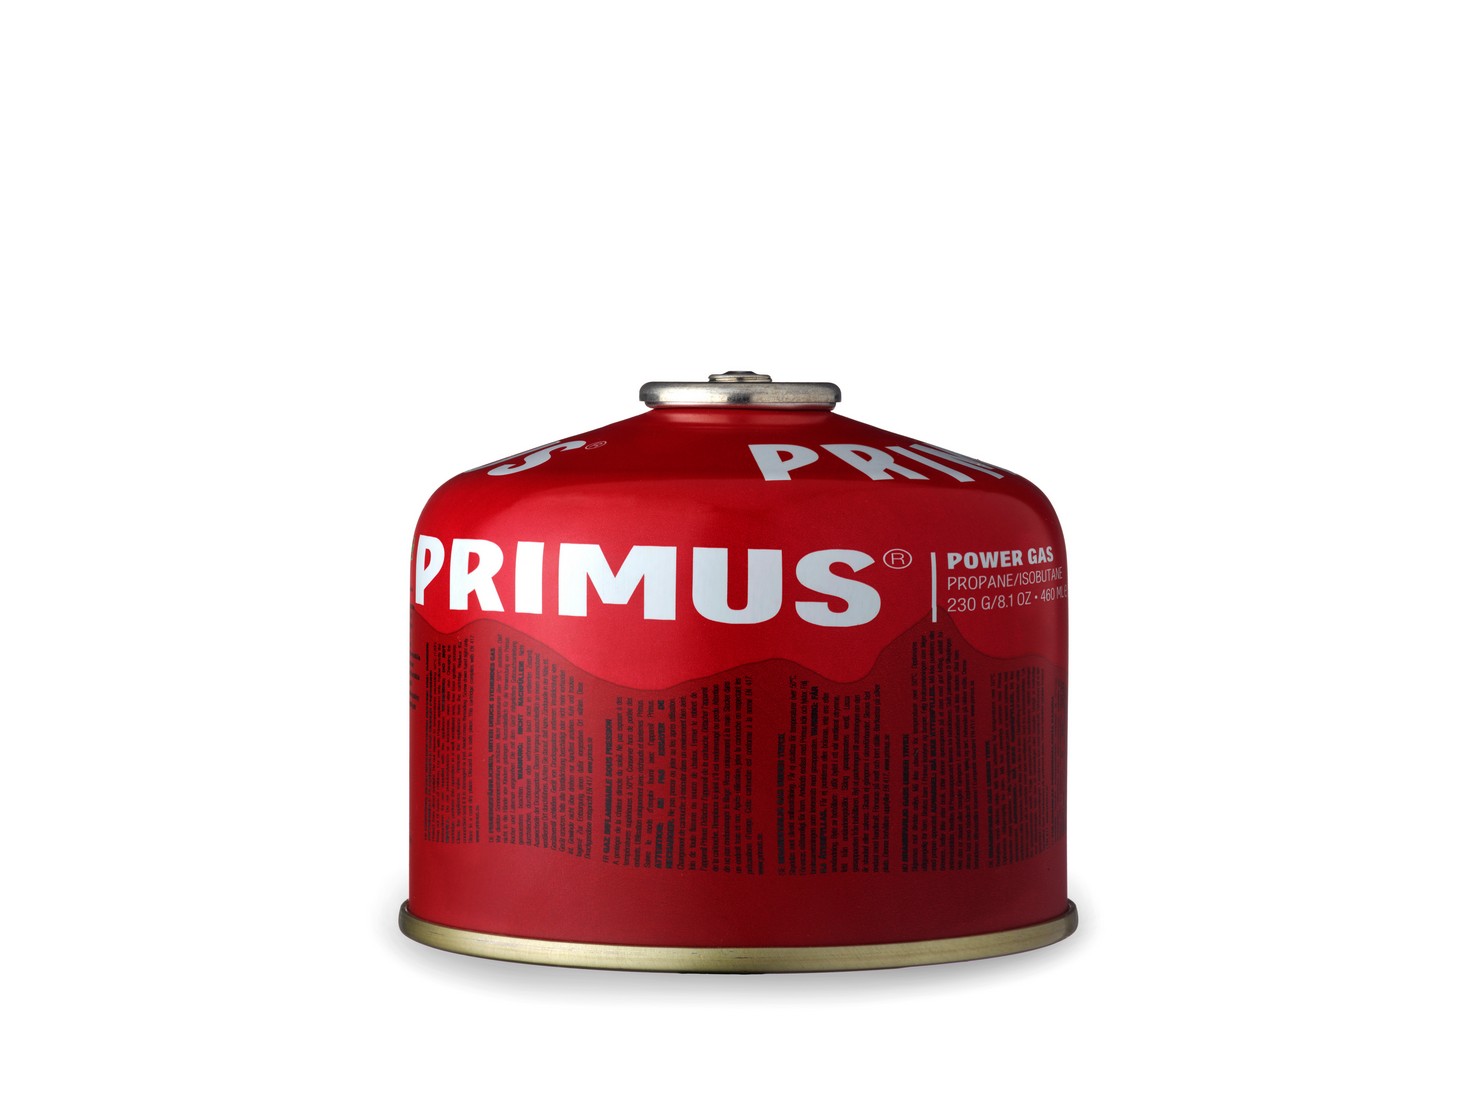 Primus "Power Gas" - 230g